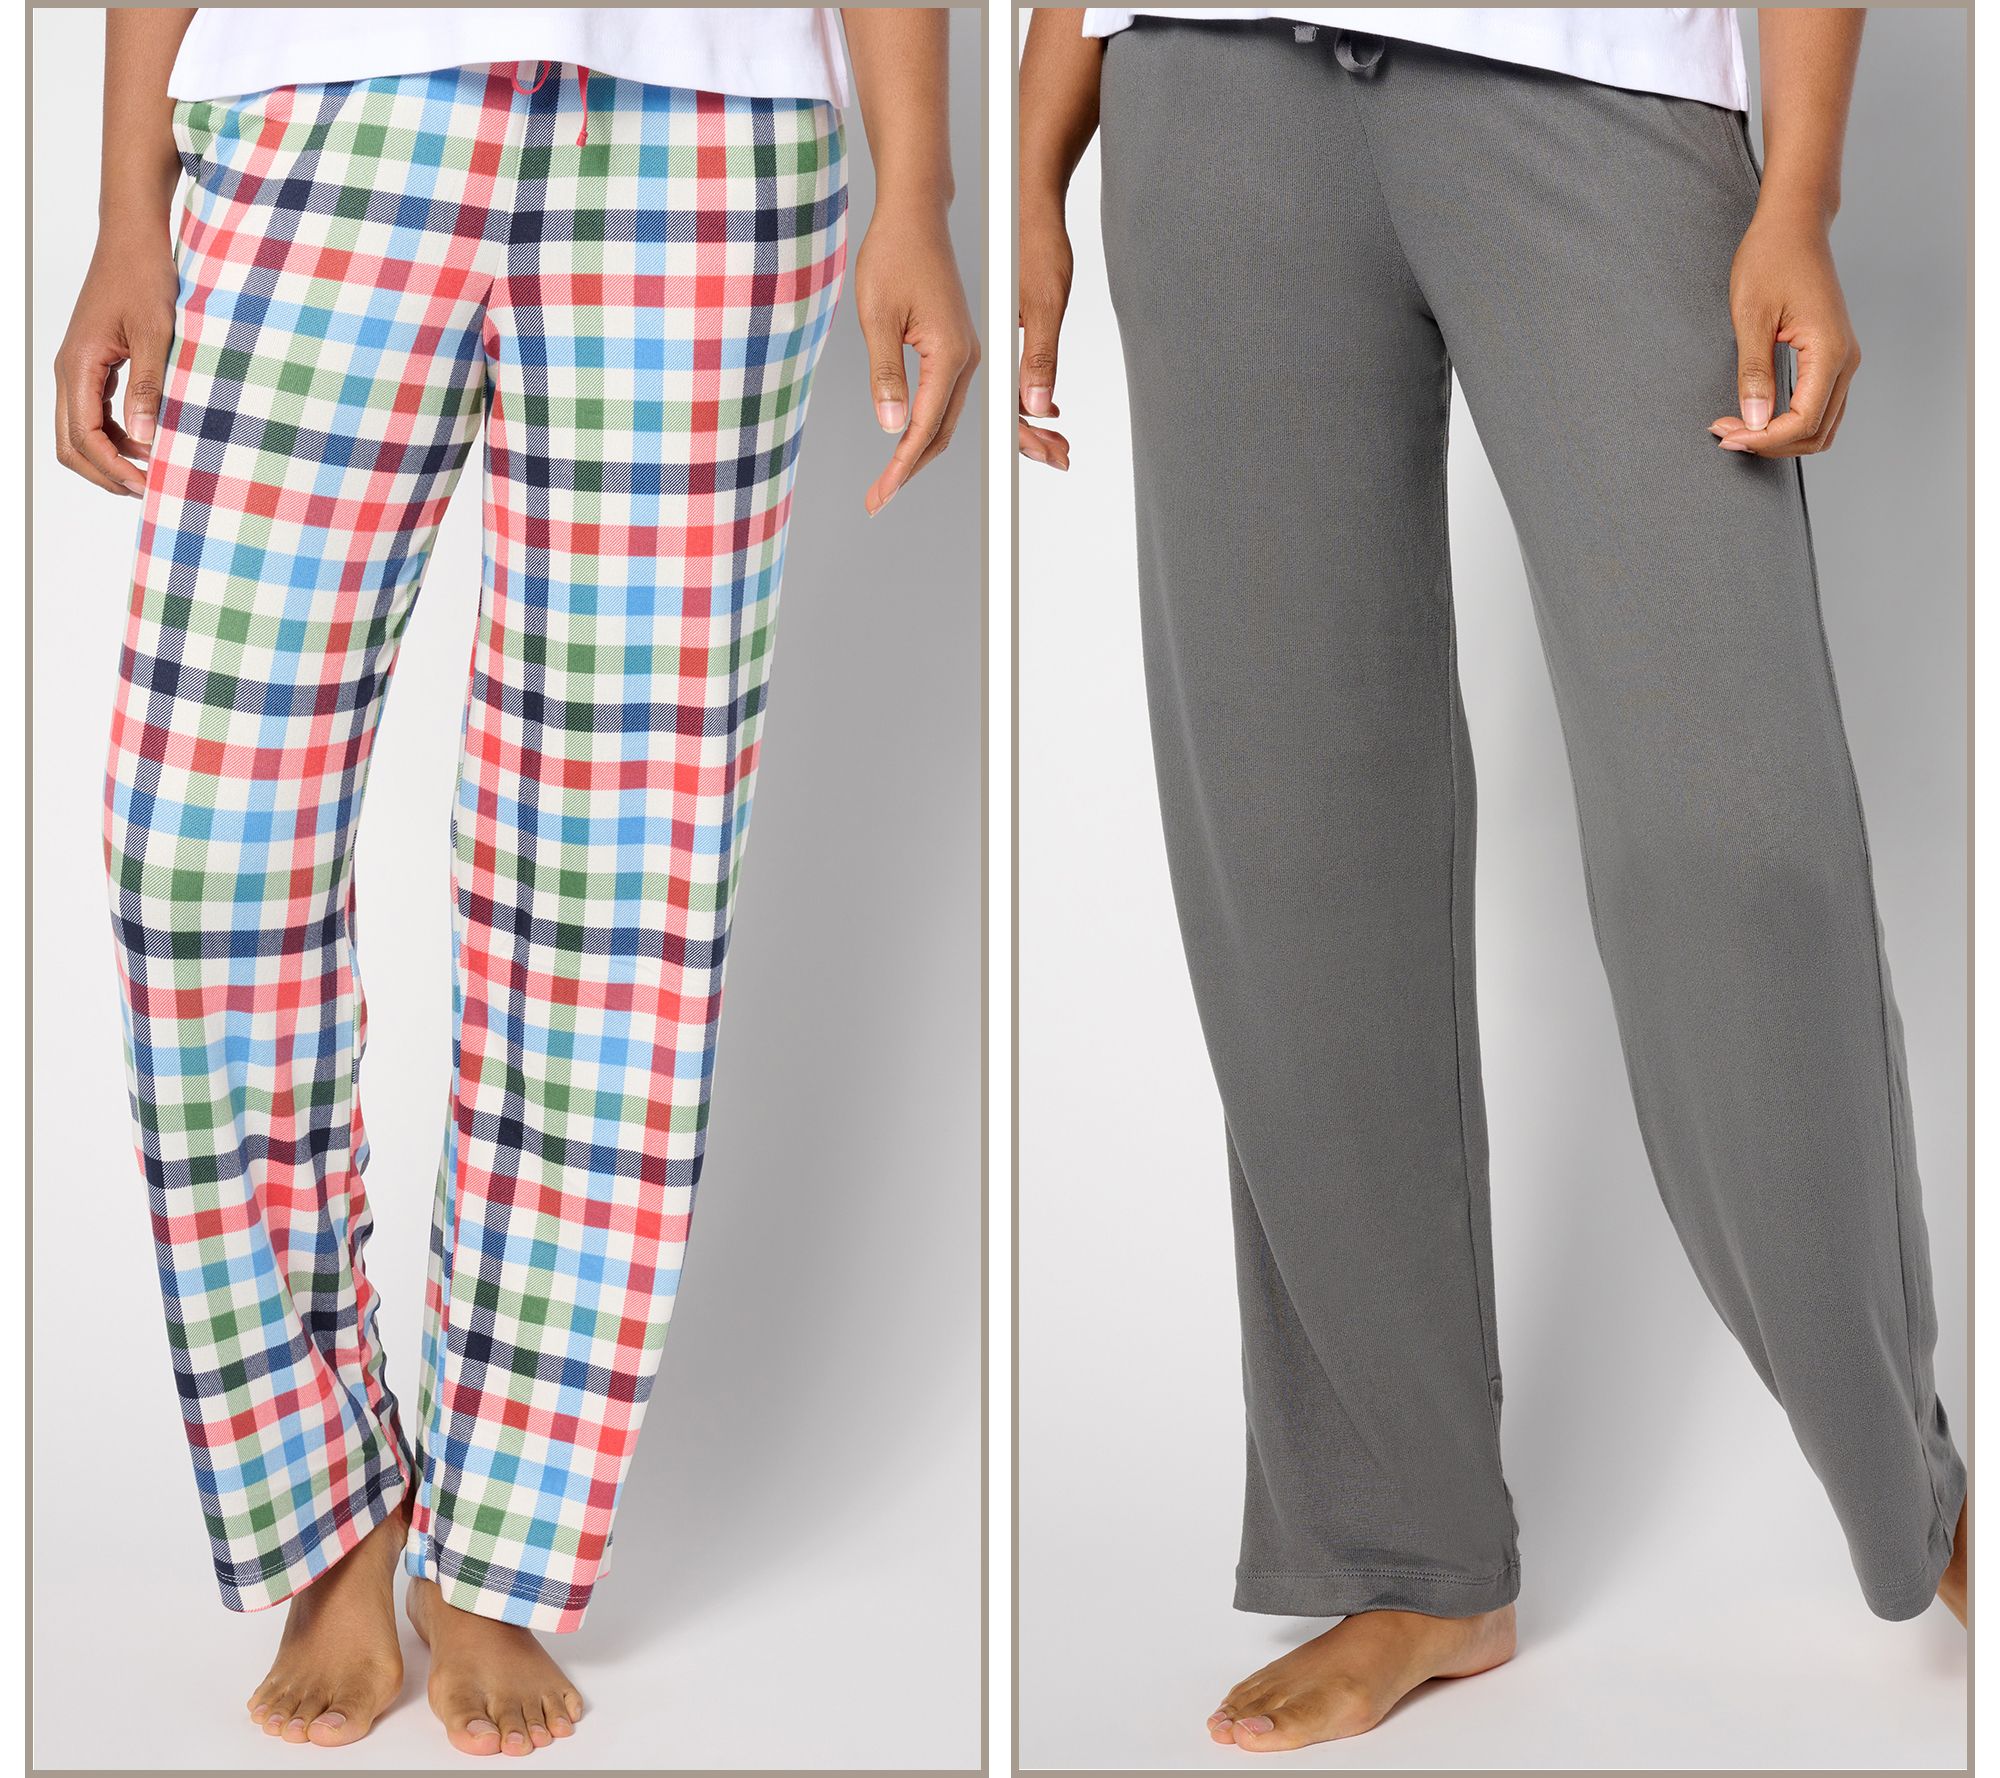 Women's Lounge Pajama Pants - Knit Sleepwear Easter Eggs on